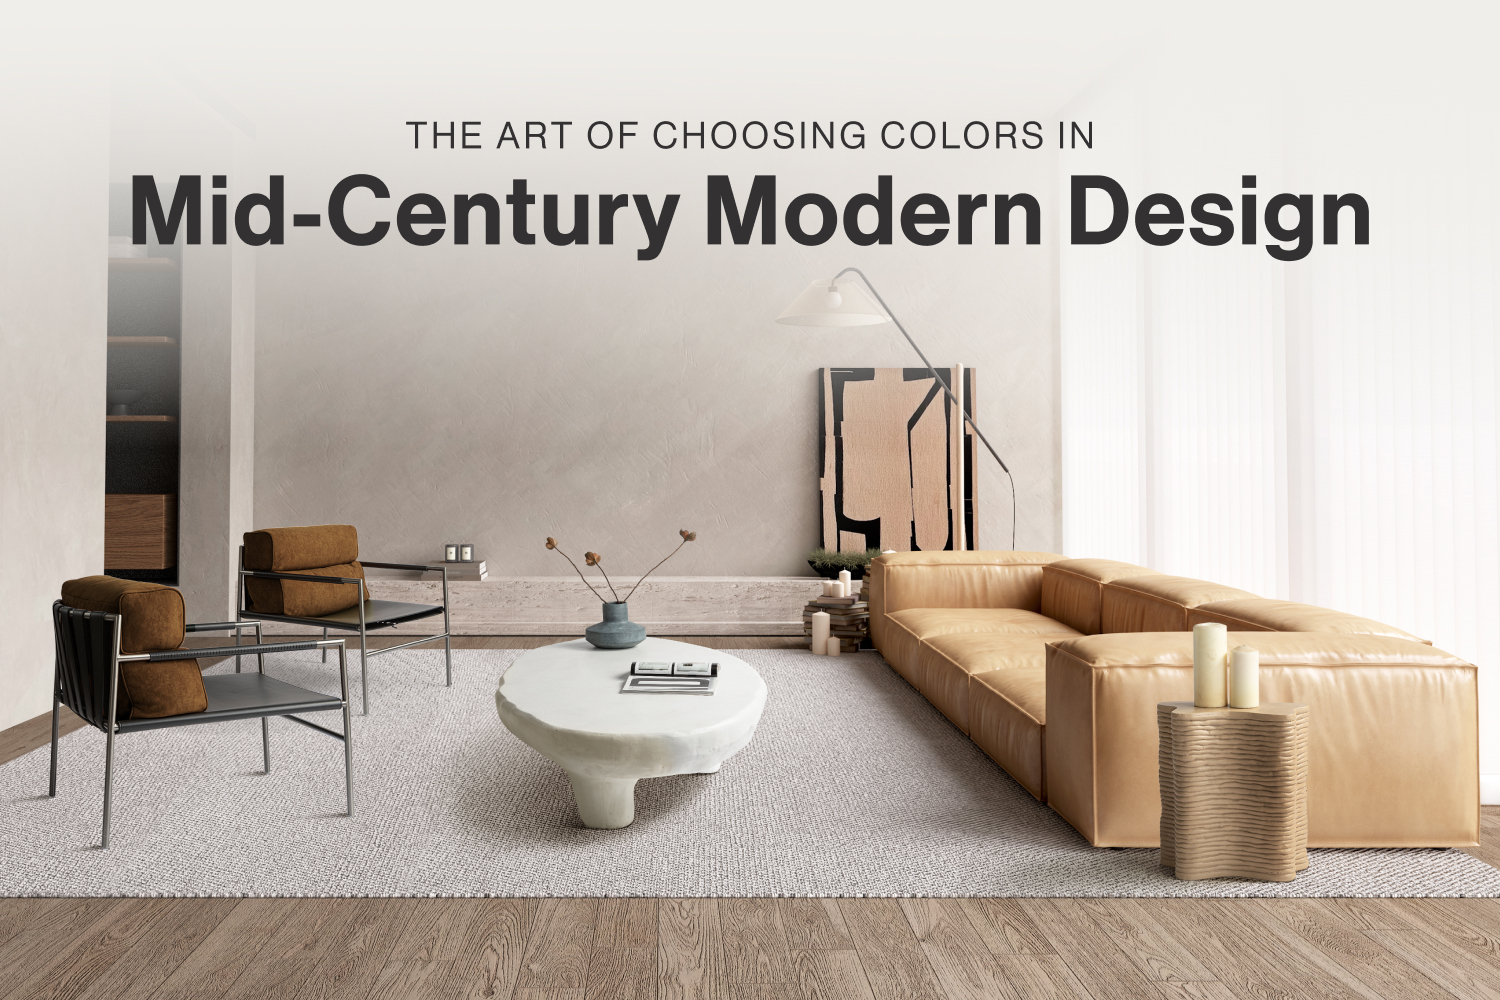 The Art of Choosing Colors in Mid-Century Modern Design